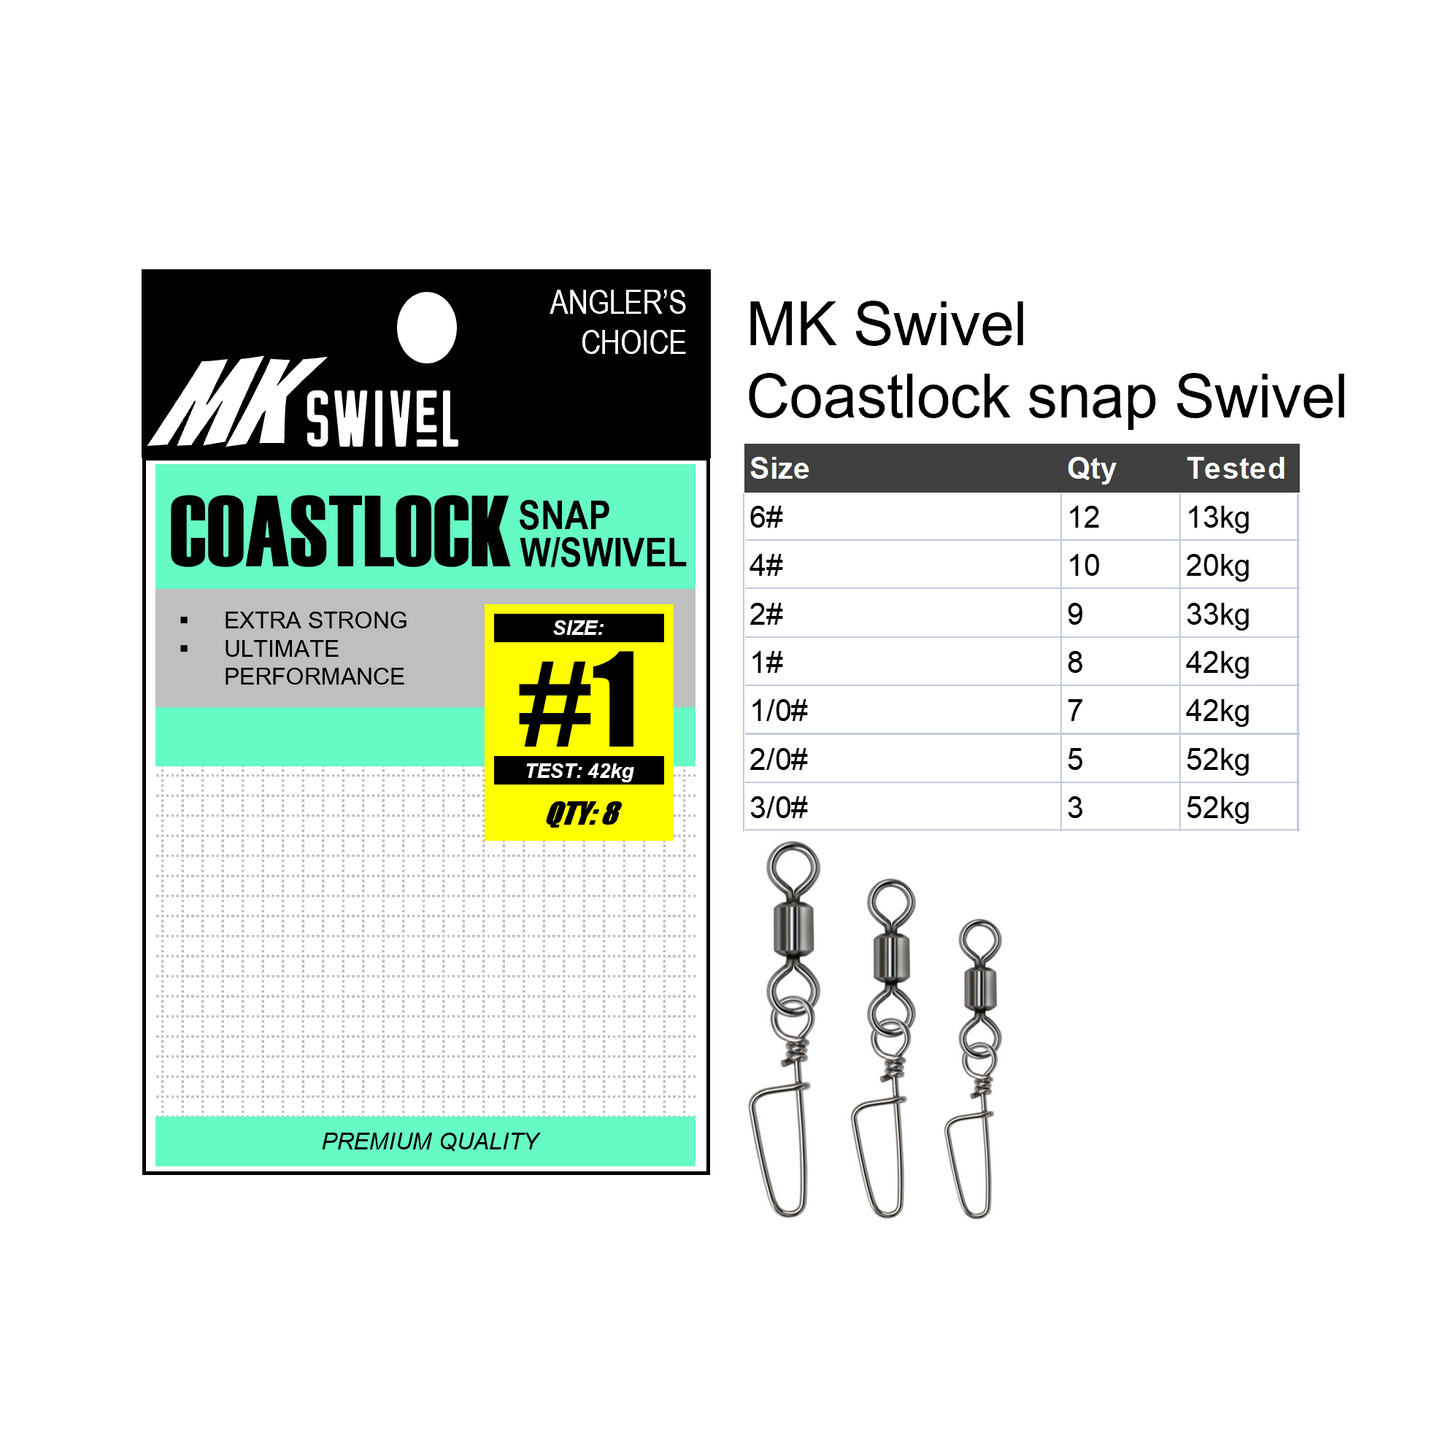 MK Swivel Coastlock snap Swivel MK040